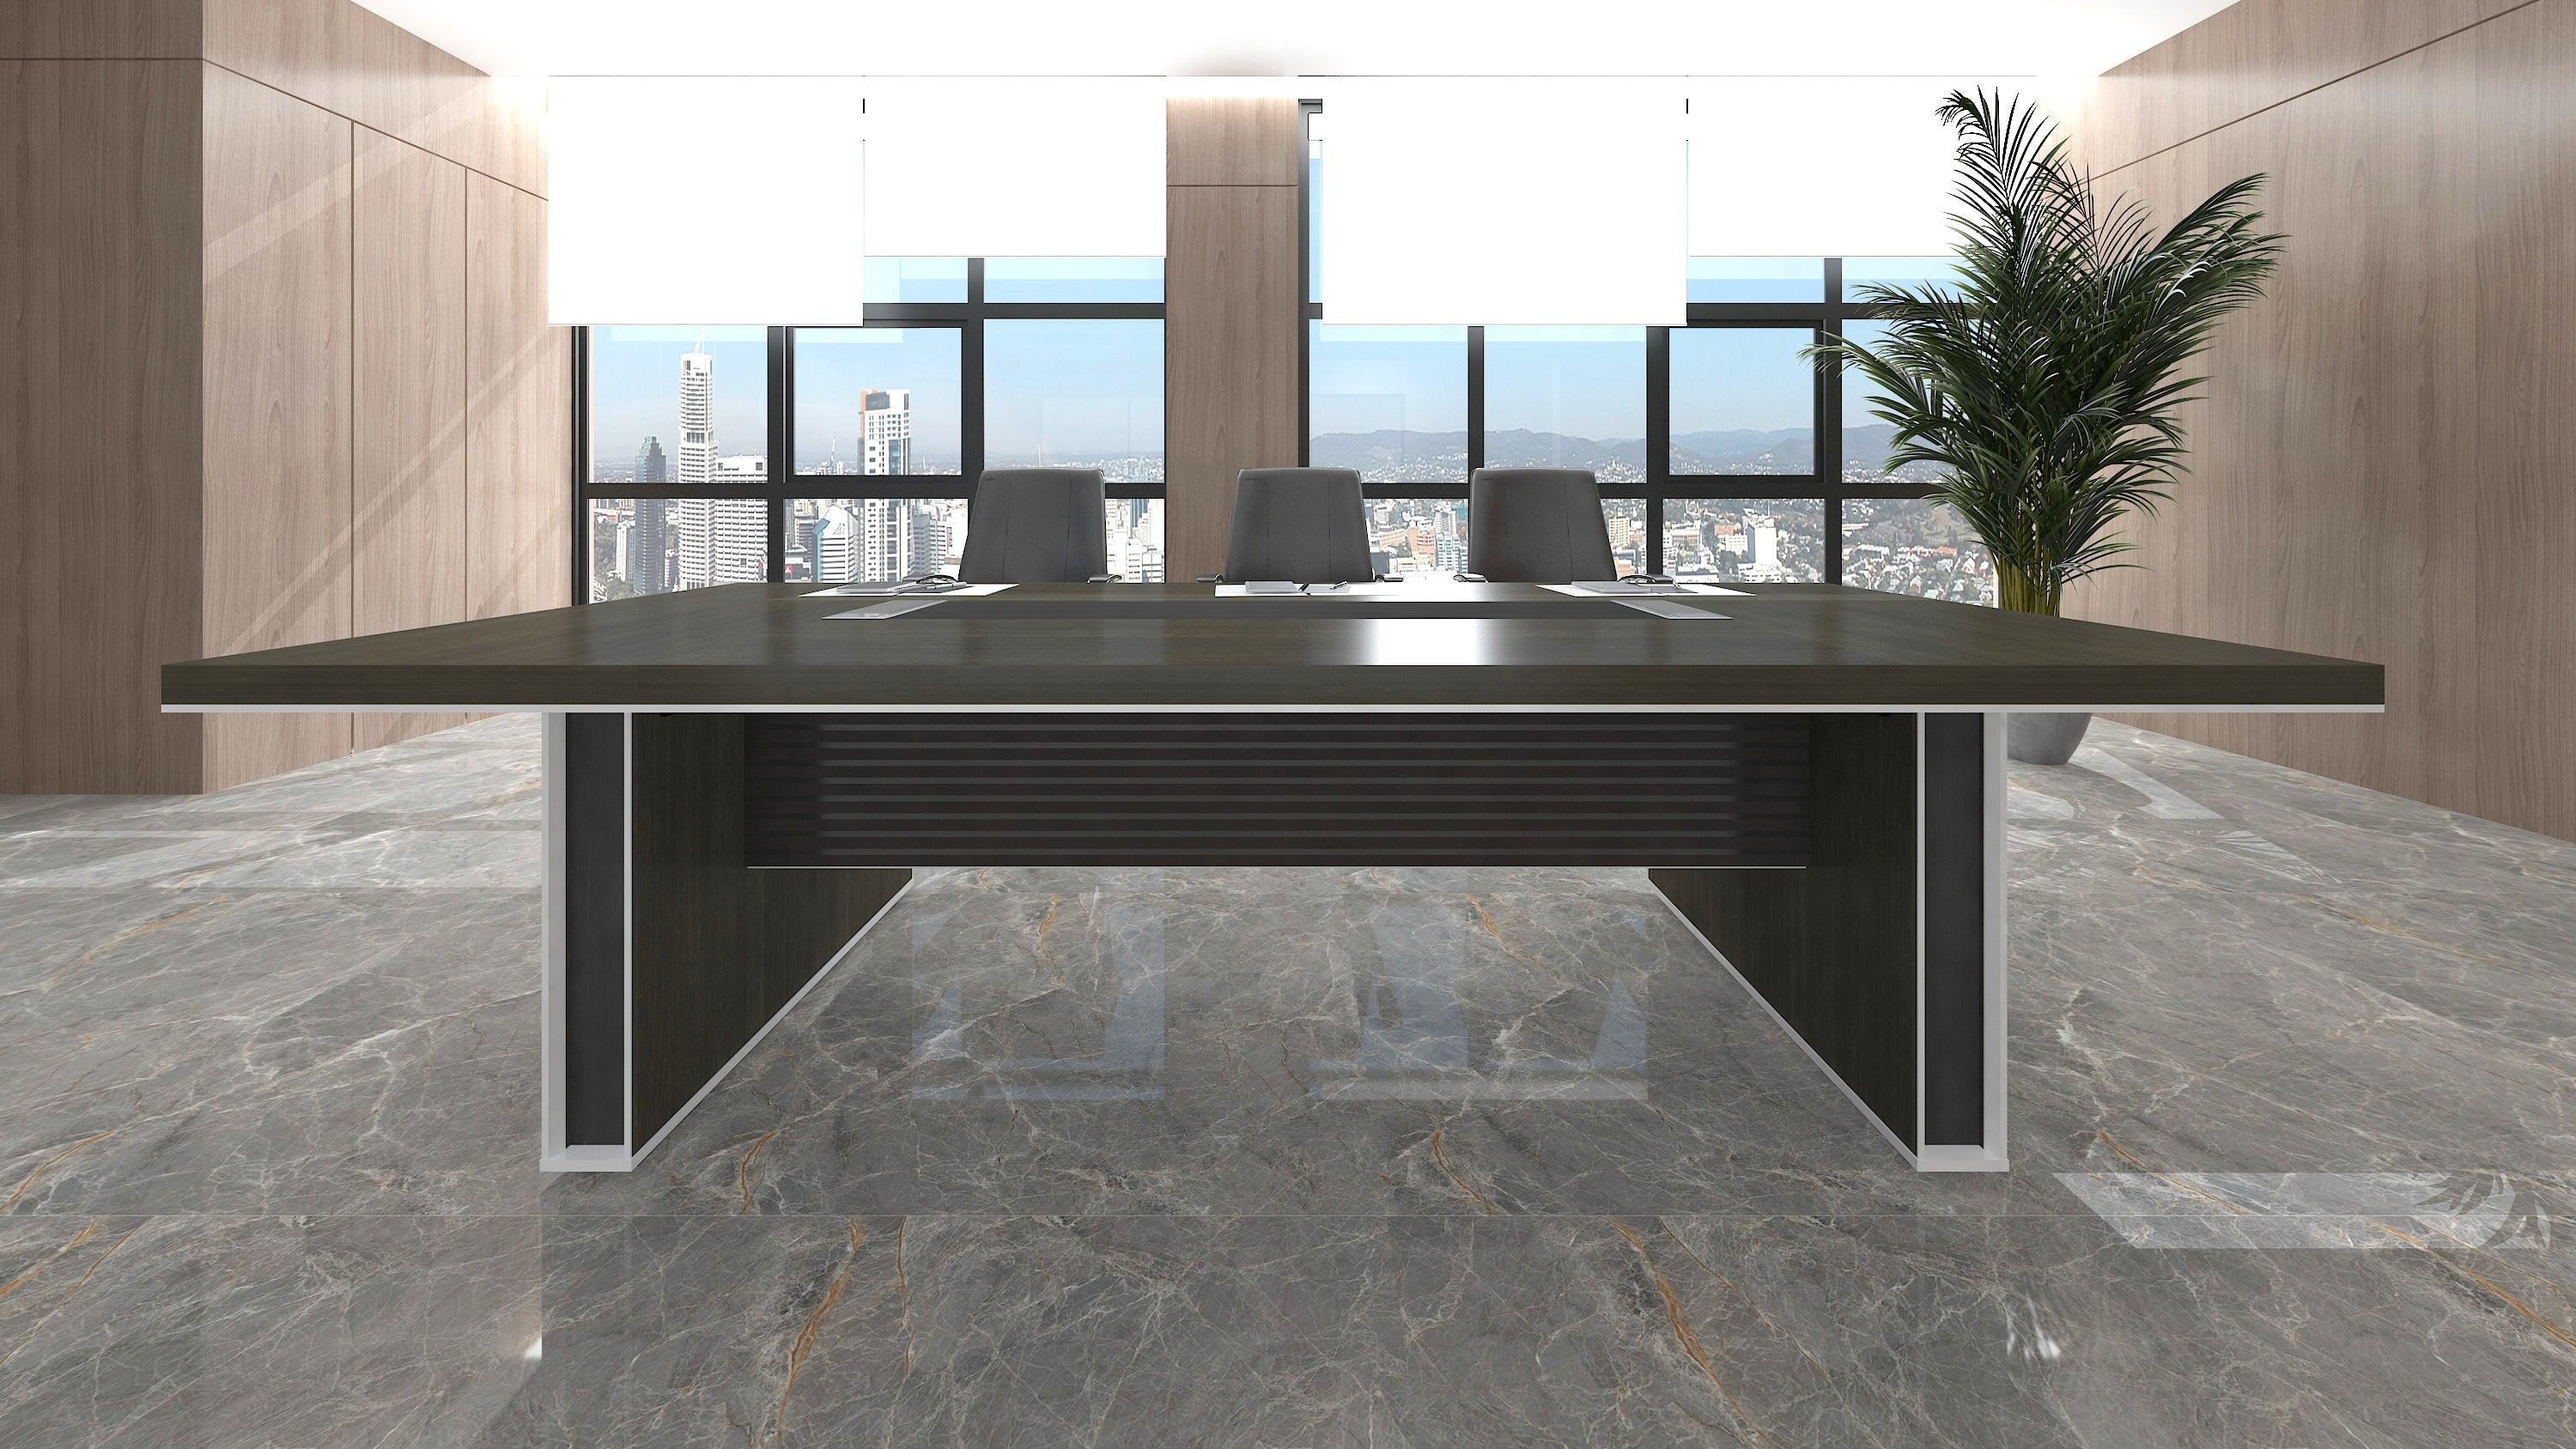 Matees Boardroom Table 2.8M - Grey/ Brown - Furniture Castle